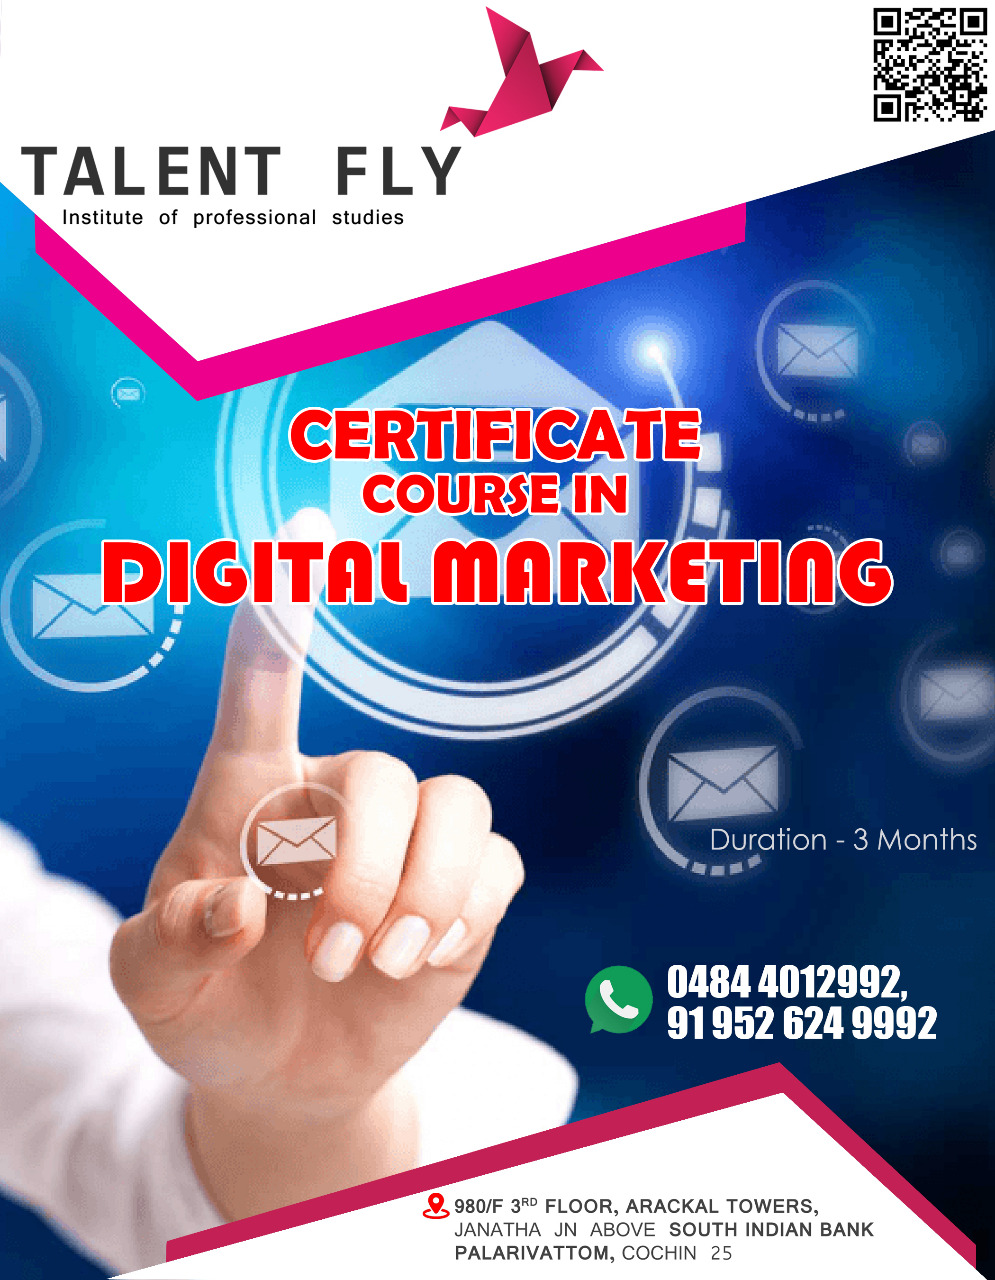 Digital Marketing Institute in Kochi, Digital Marketing Course in Kochi